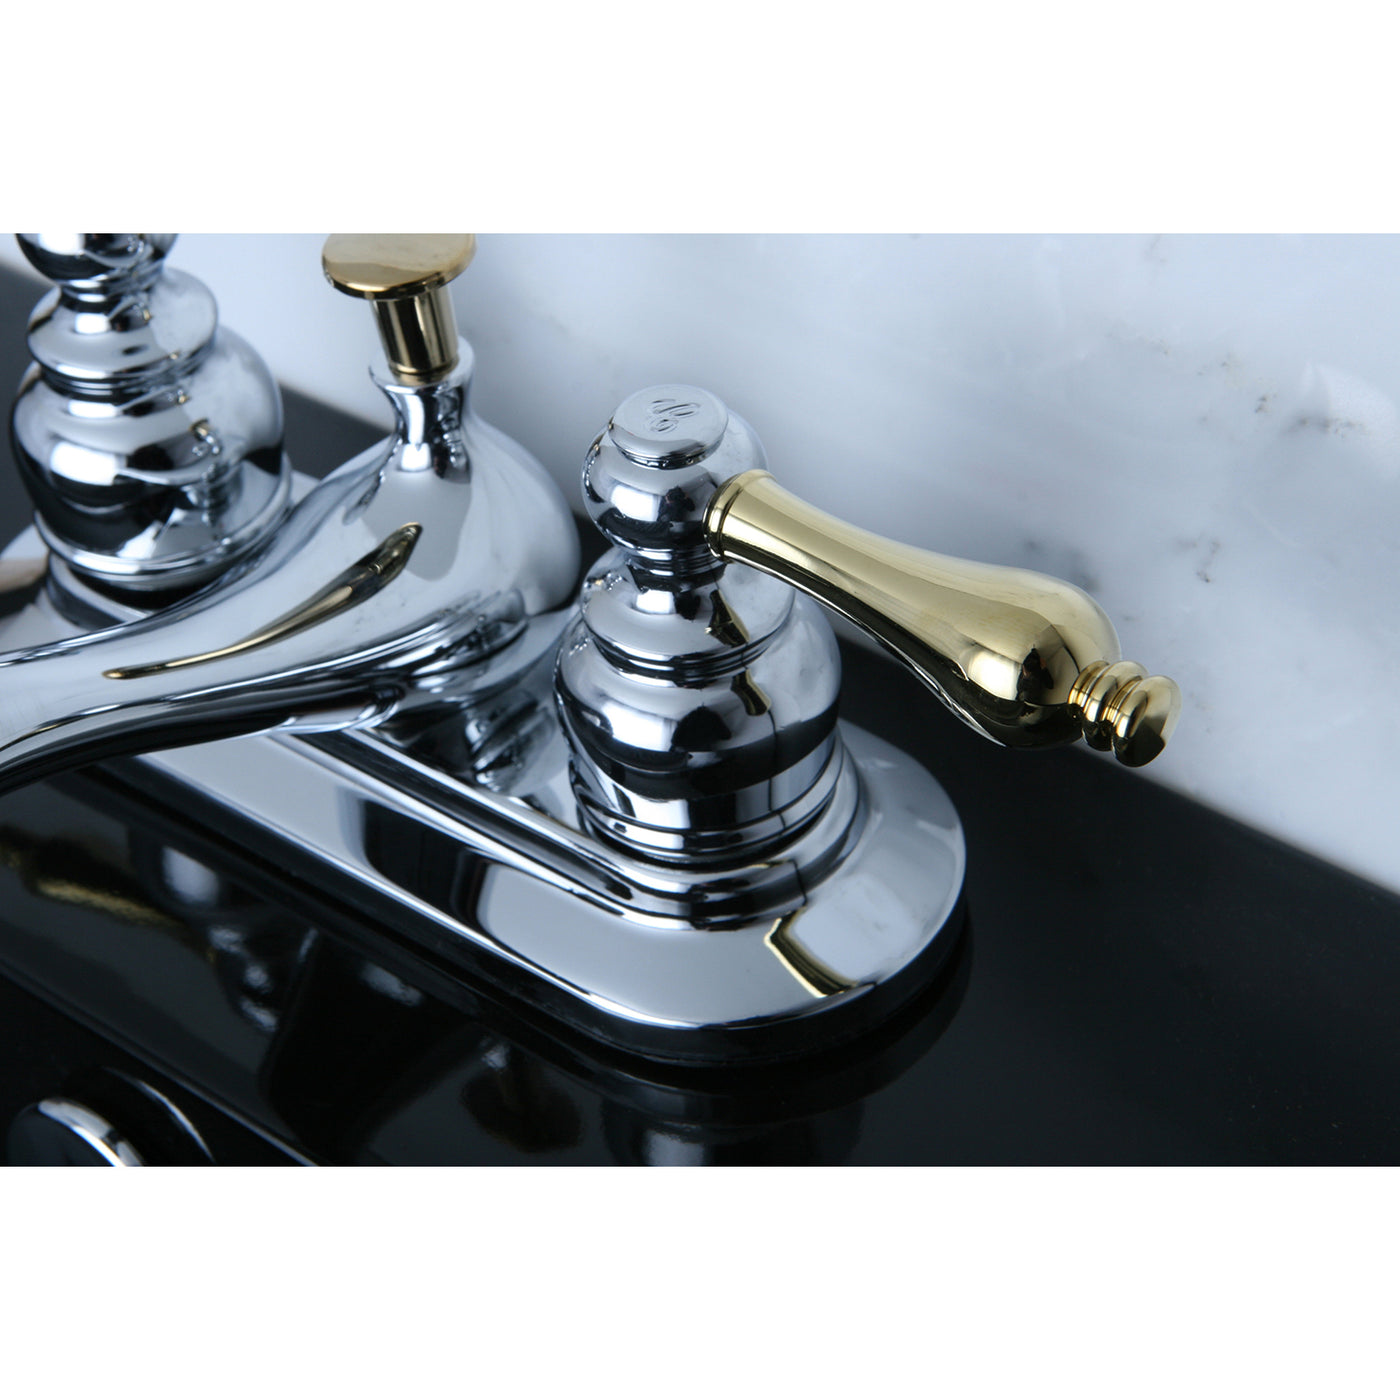 Elements of Design EB604AL 4-Inch Centerset Bathroom Faucet, Polished Chrome/Polished Brass